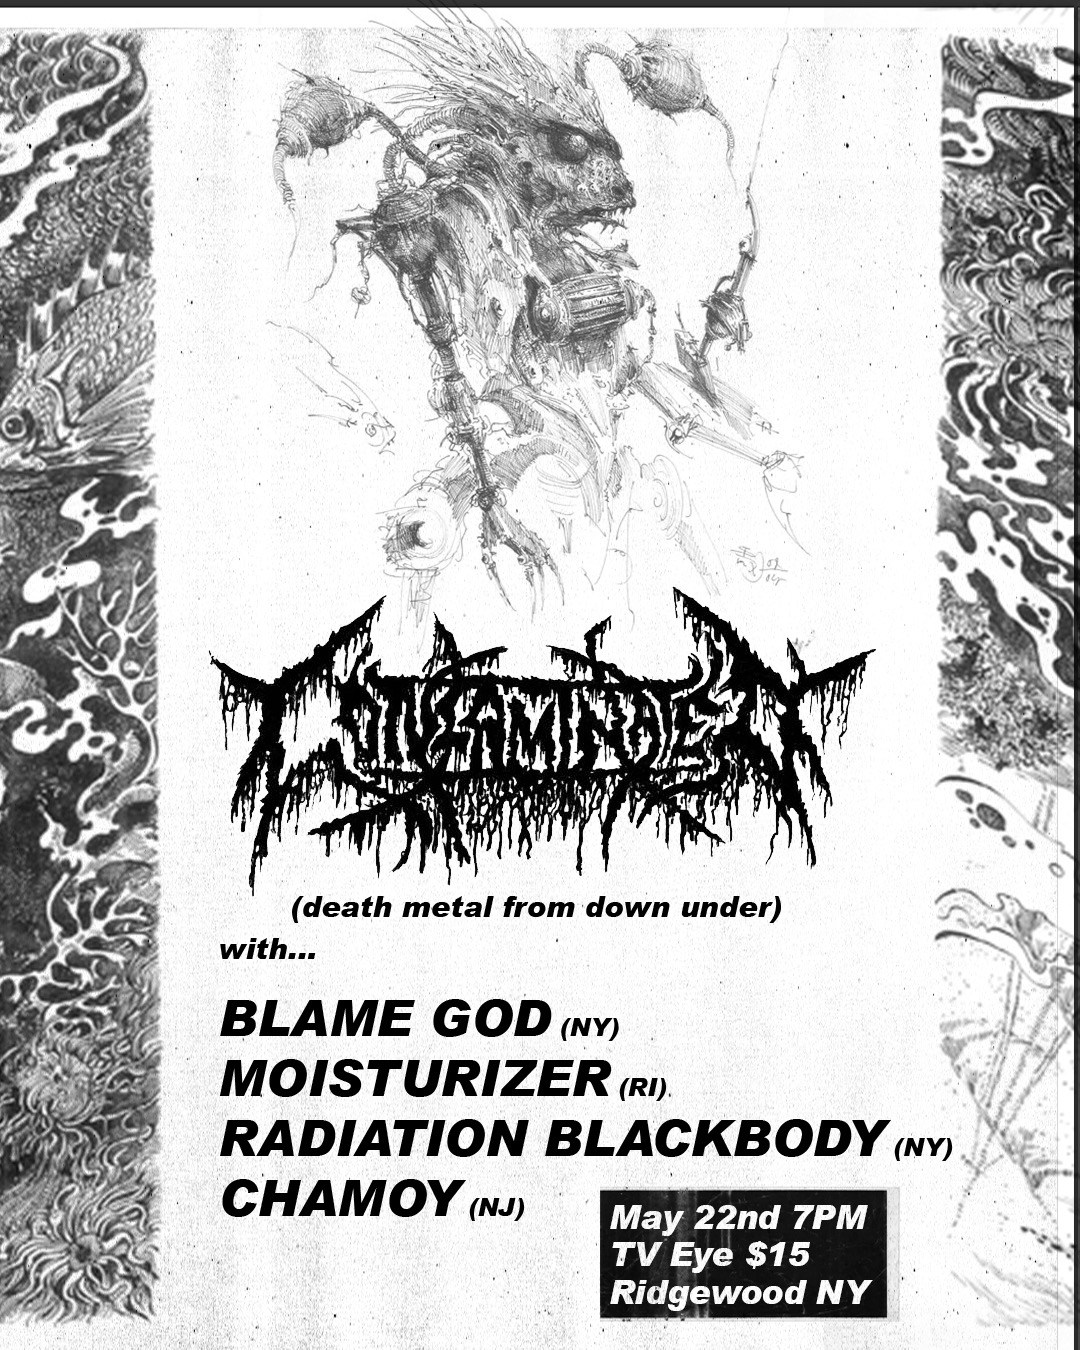 Contaminated, Blame God, Moisturizer, Radiation Blackbody, C